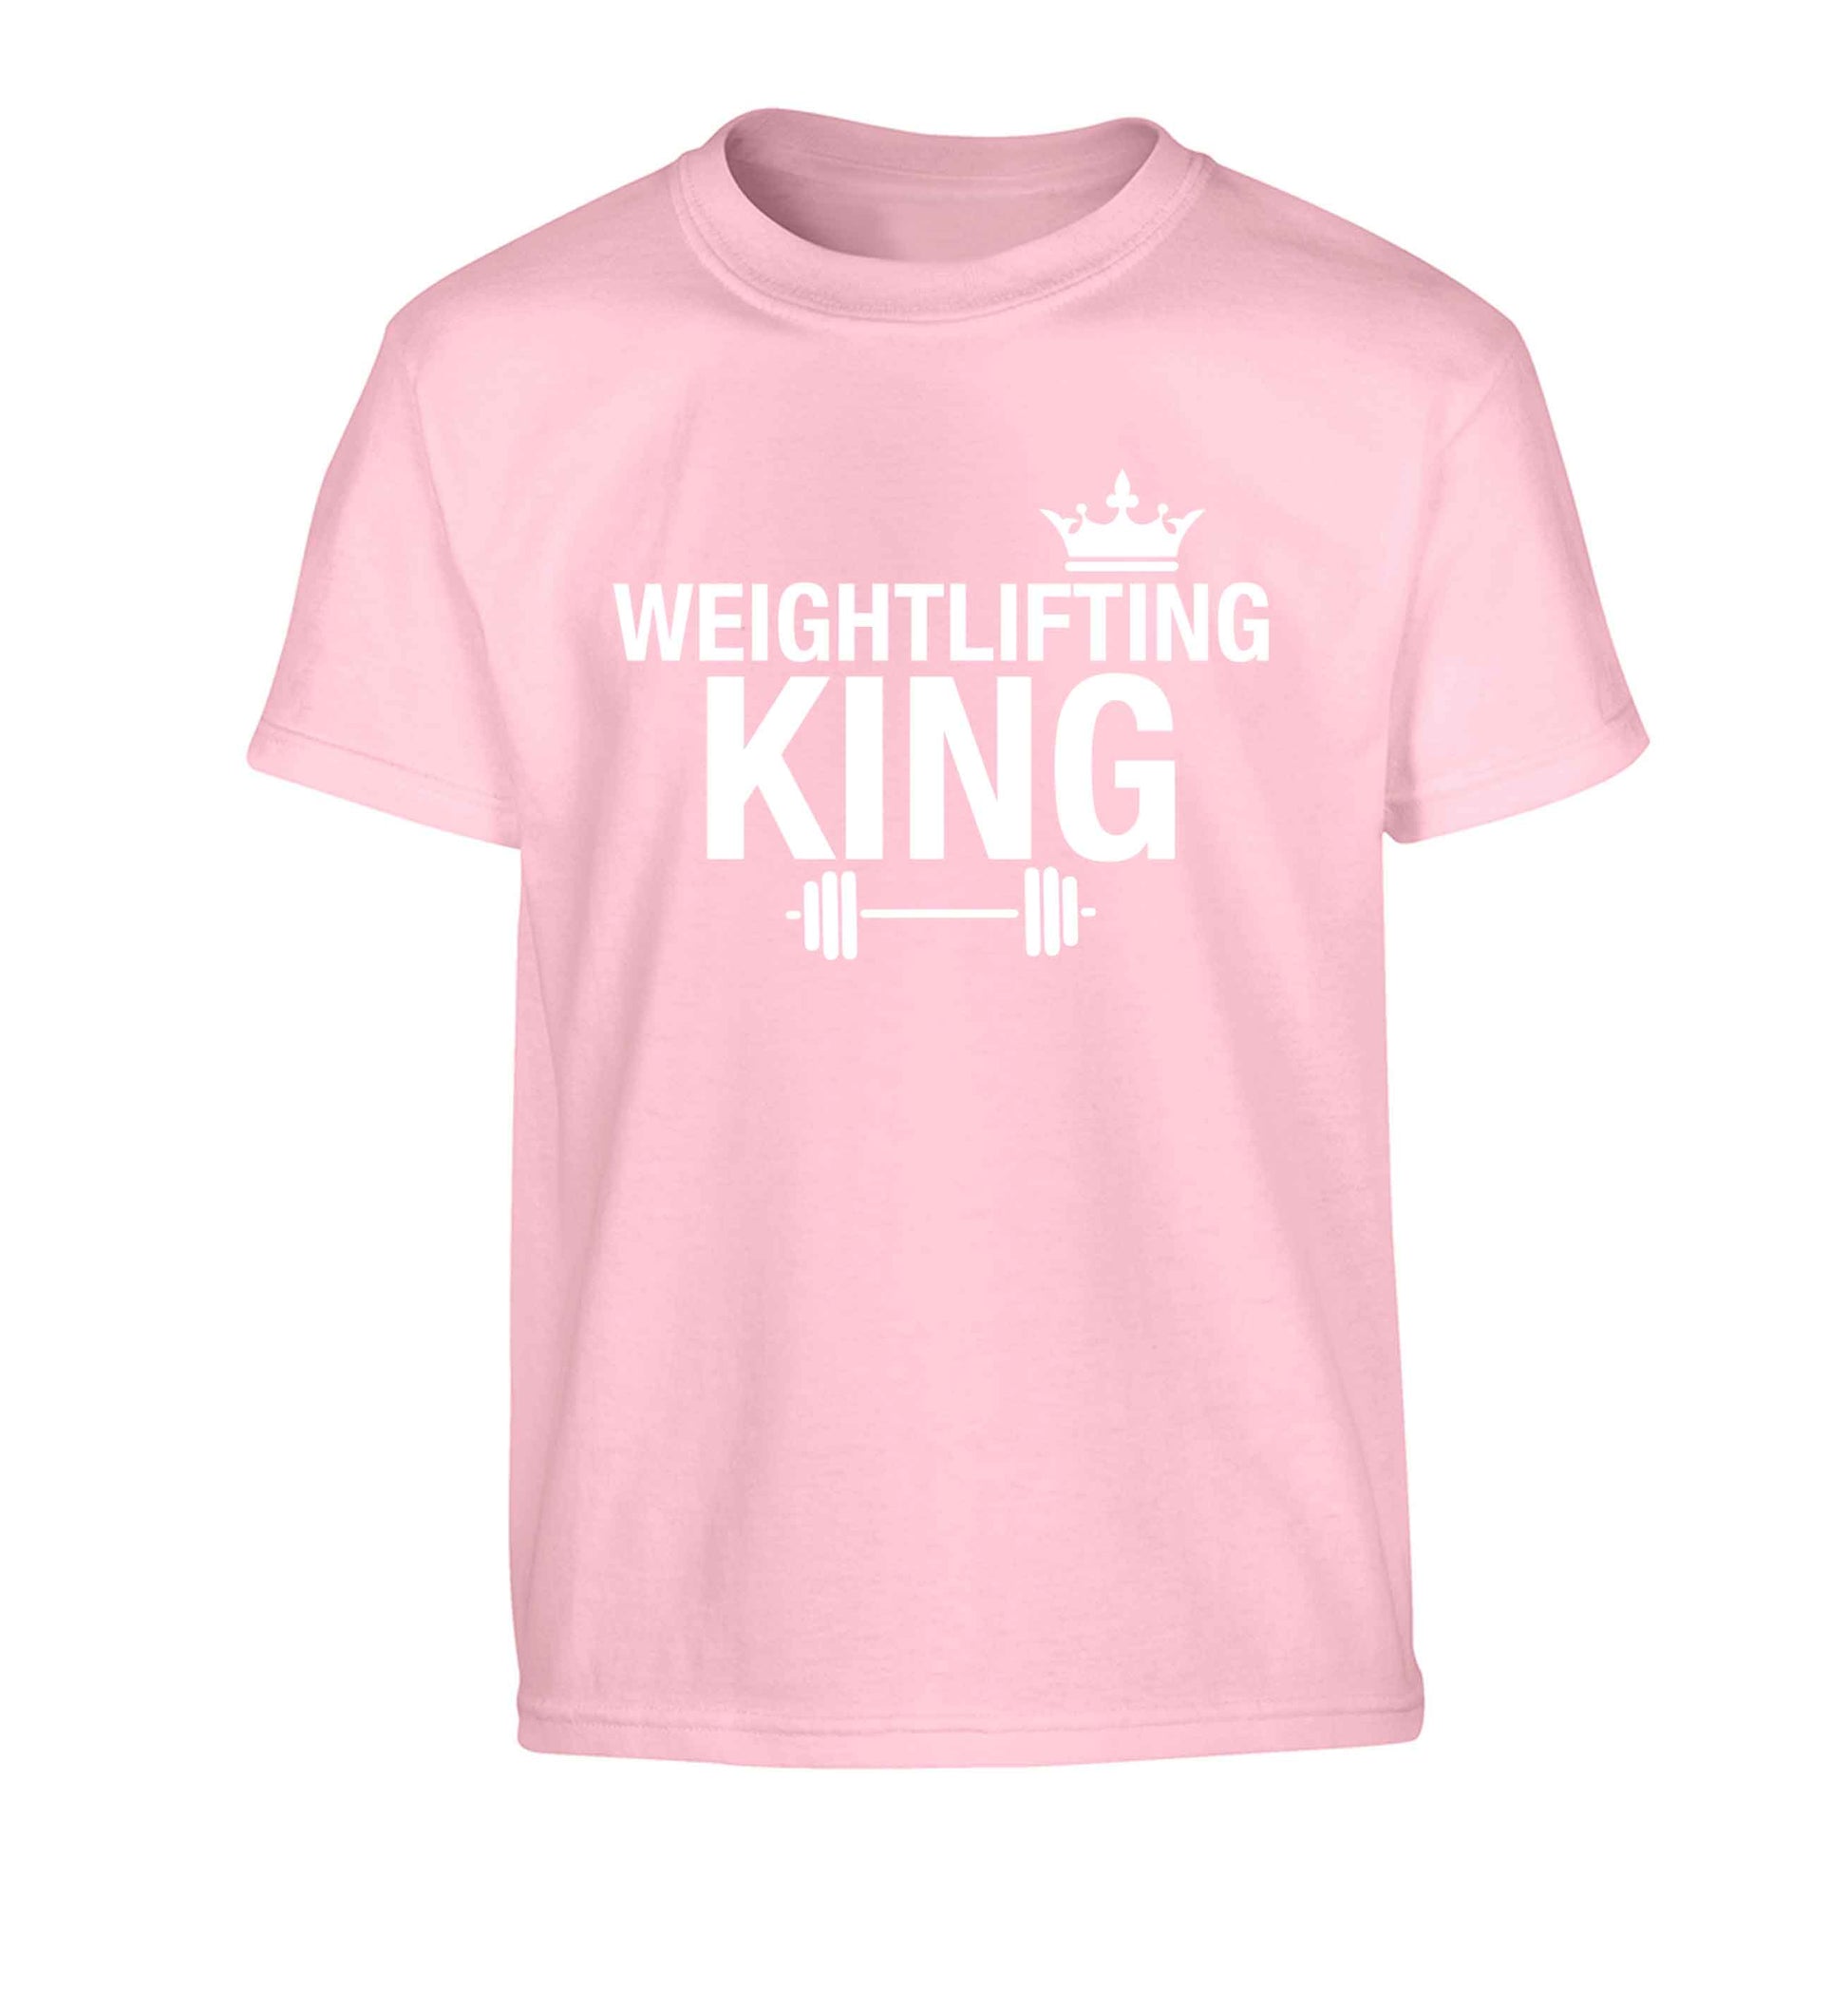 Weightlifting king Children's light pink Tshirt 12-13 Years